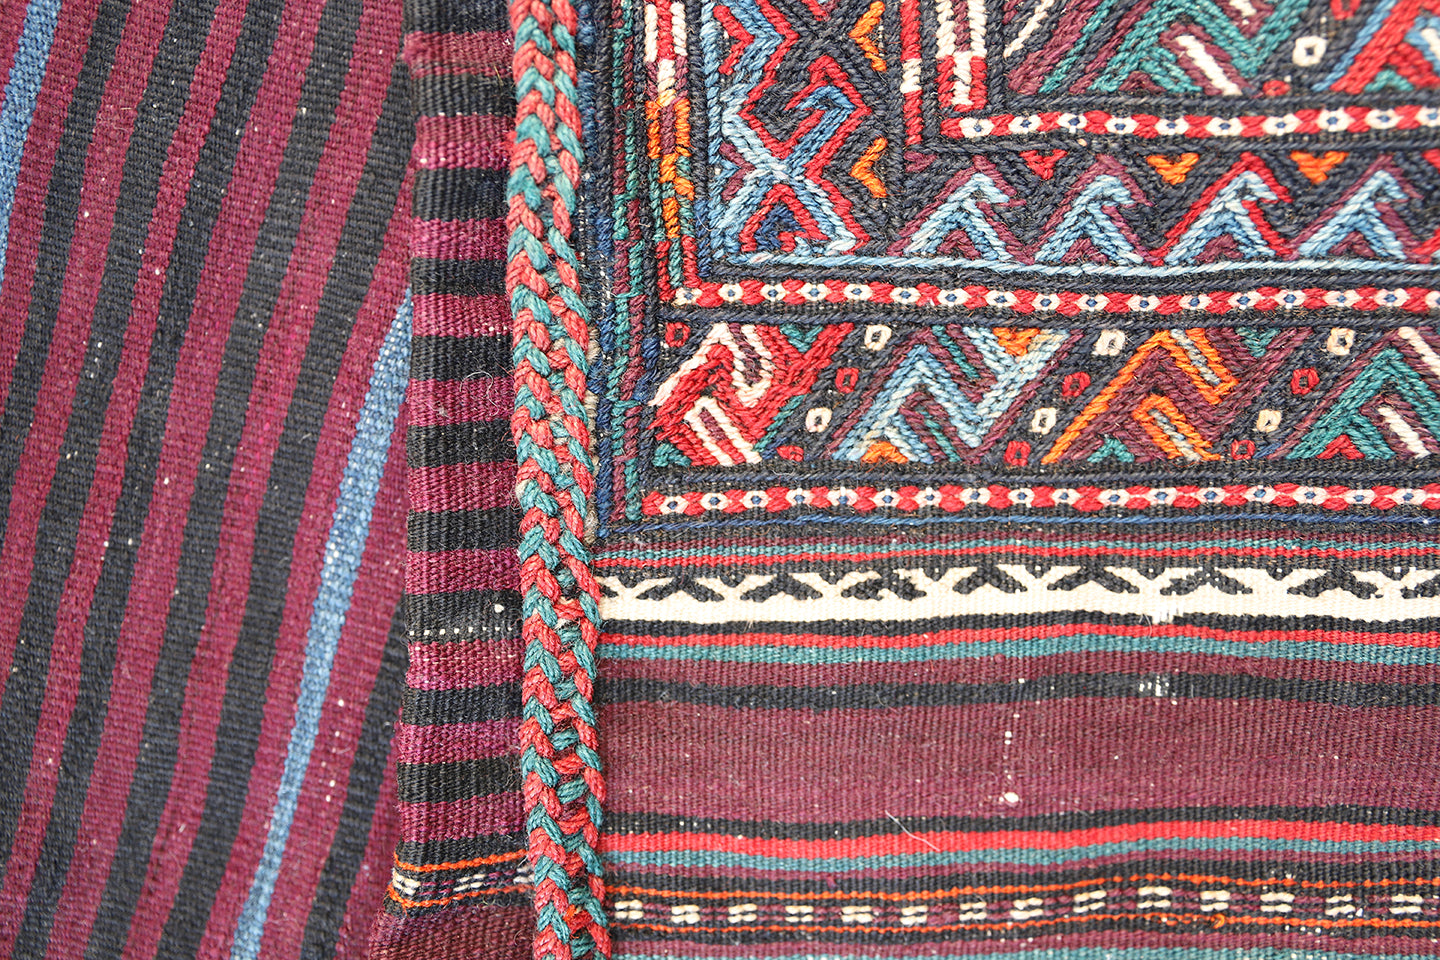 3'x4' Vintage Handwoven Tribal Storage Bag Rug